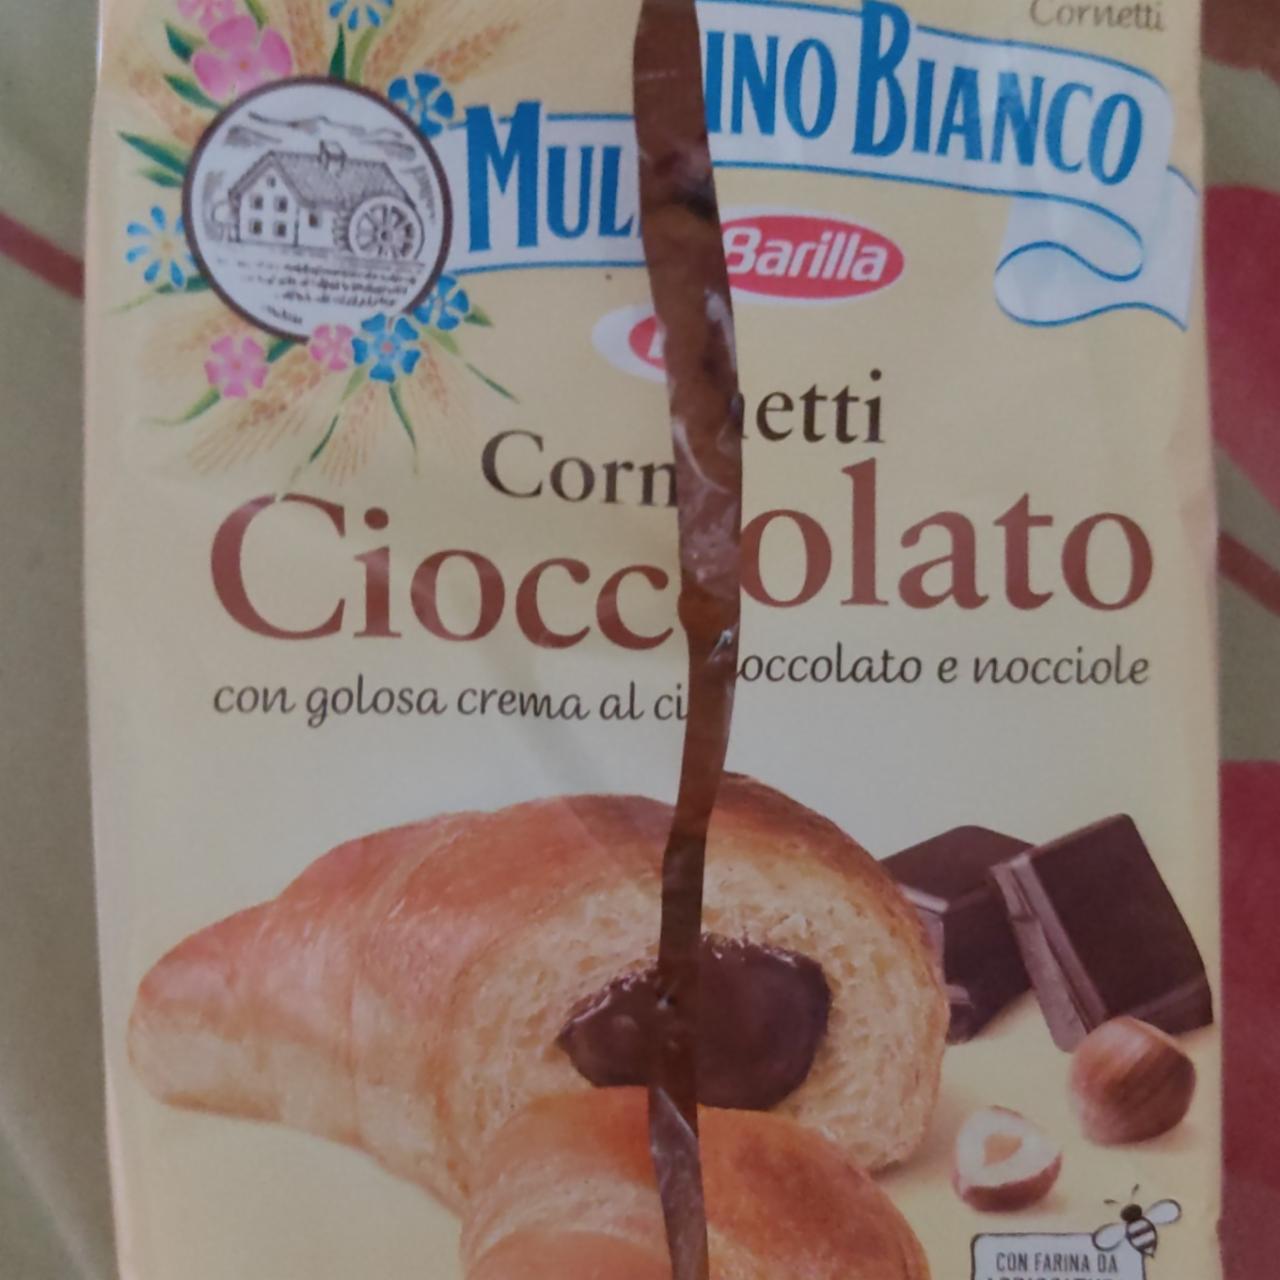 Фото - круассаны с шоколдаом Mulino Bianco Barilla